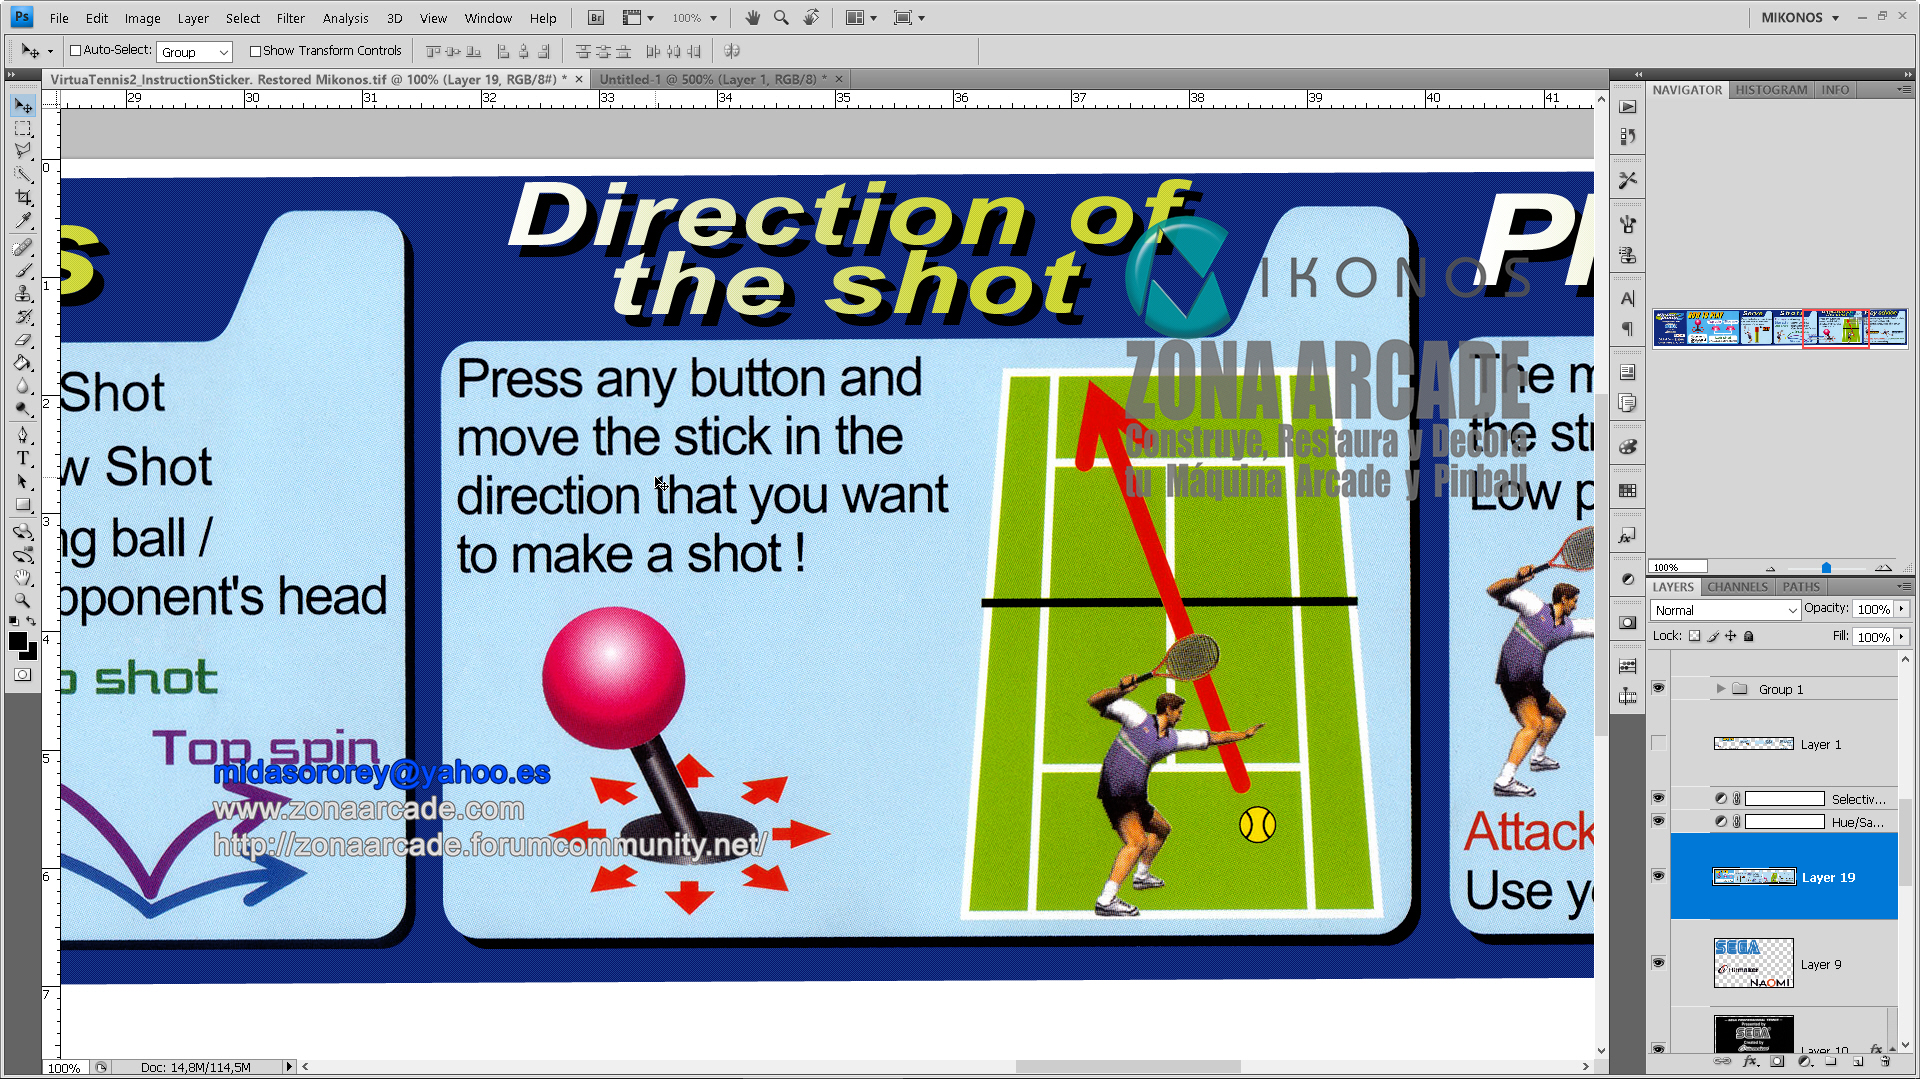 Virtua-Tennis-2-Instruction-Sheet-Restored-Mikonos3